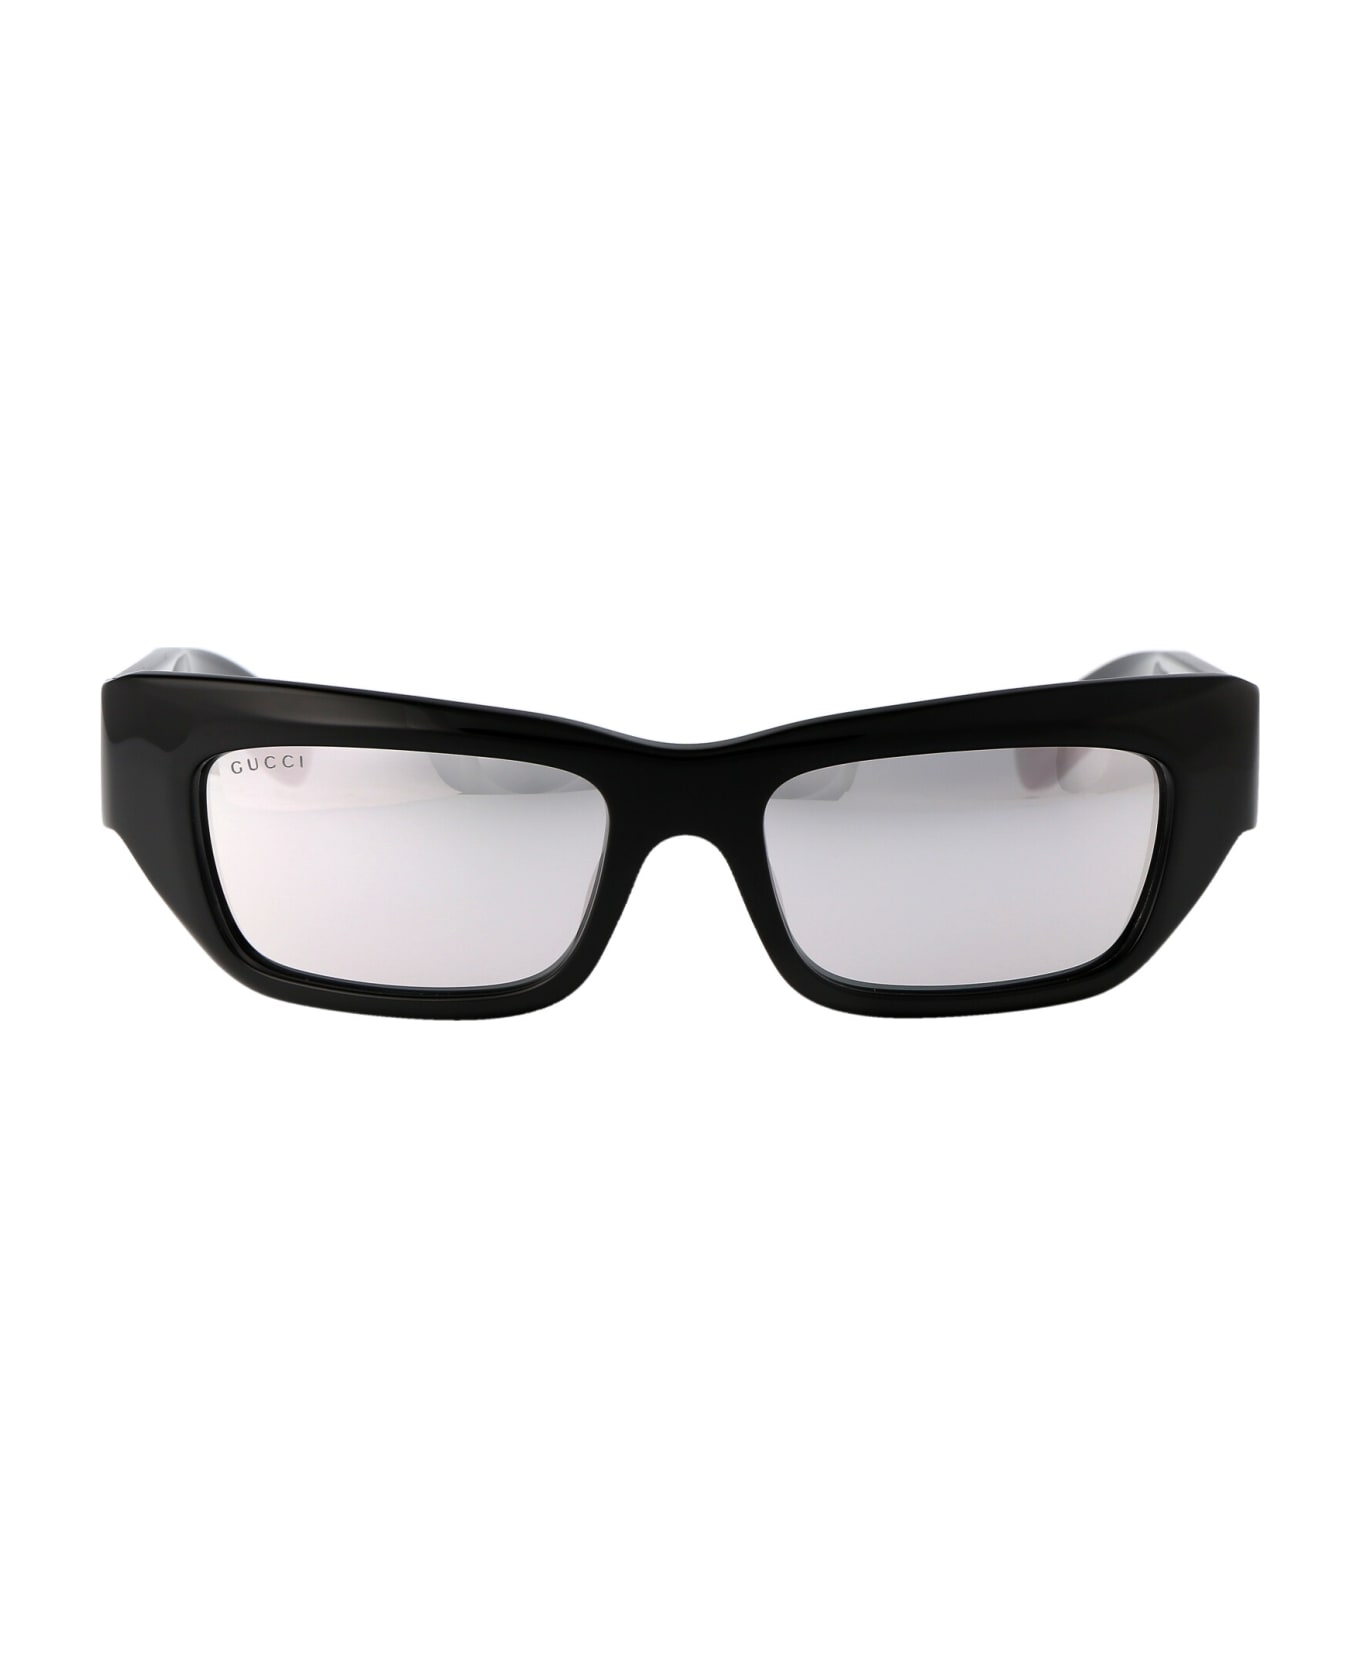 Gucci Eyewear Gg1296s Sunglasses - 002 BLACK BLACK SILVER